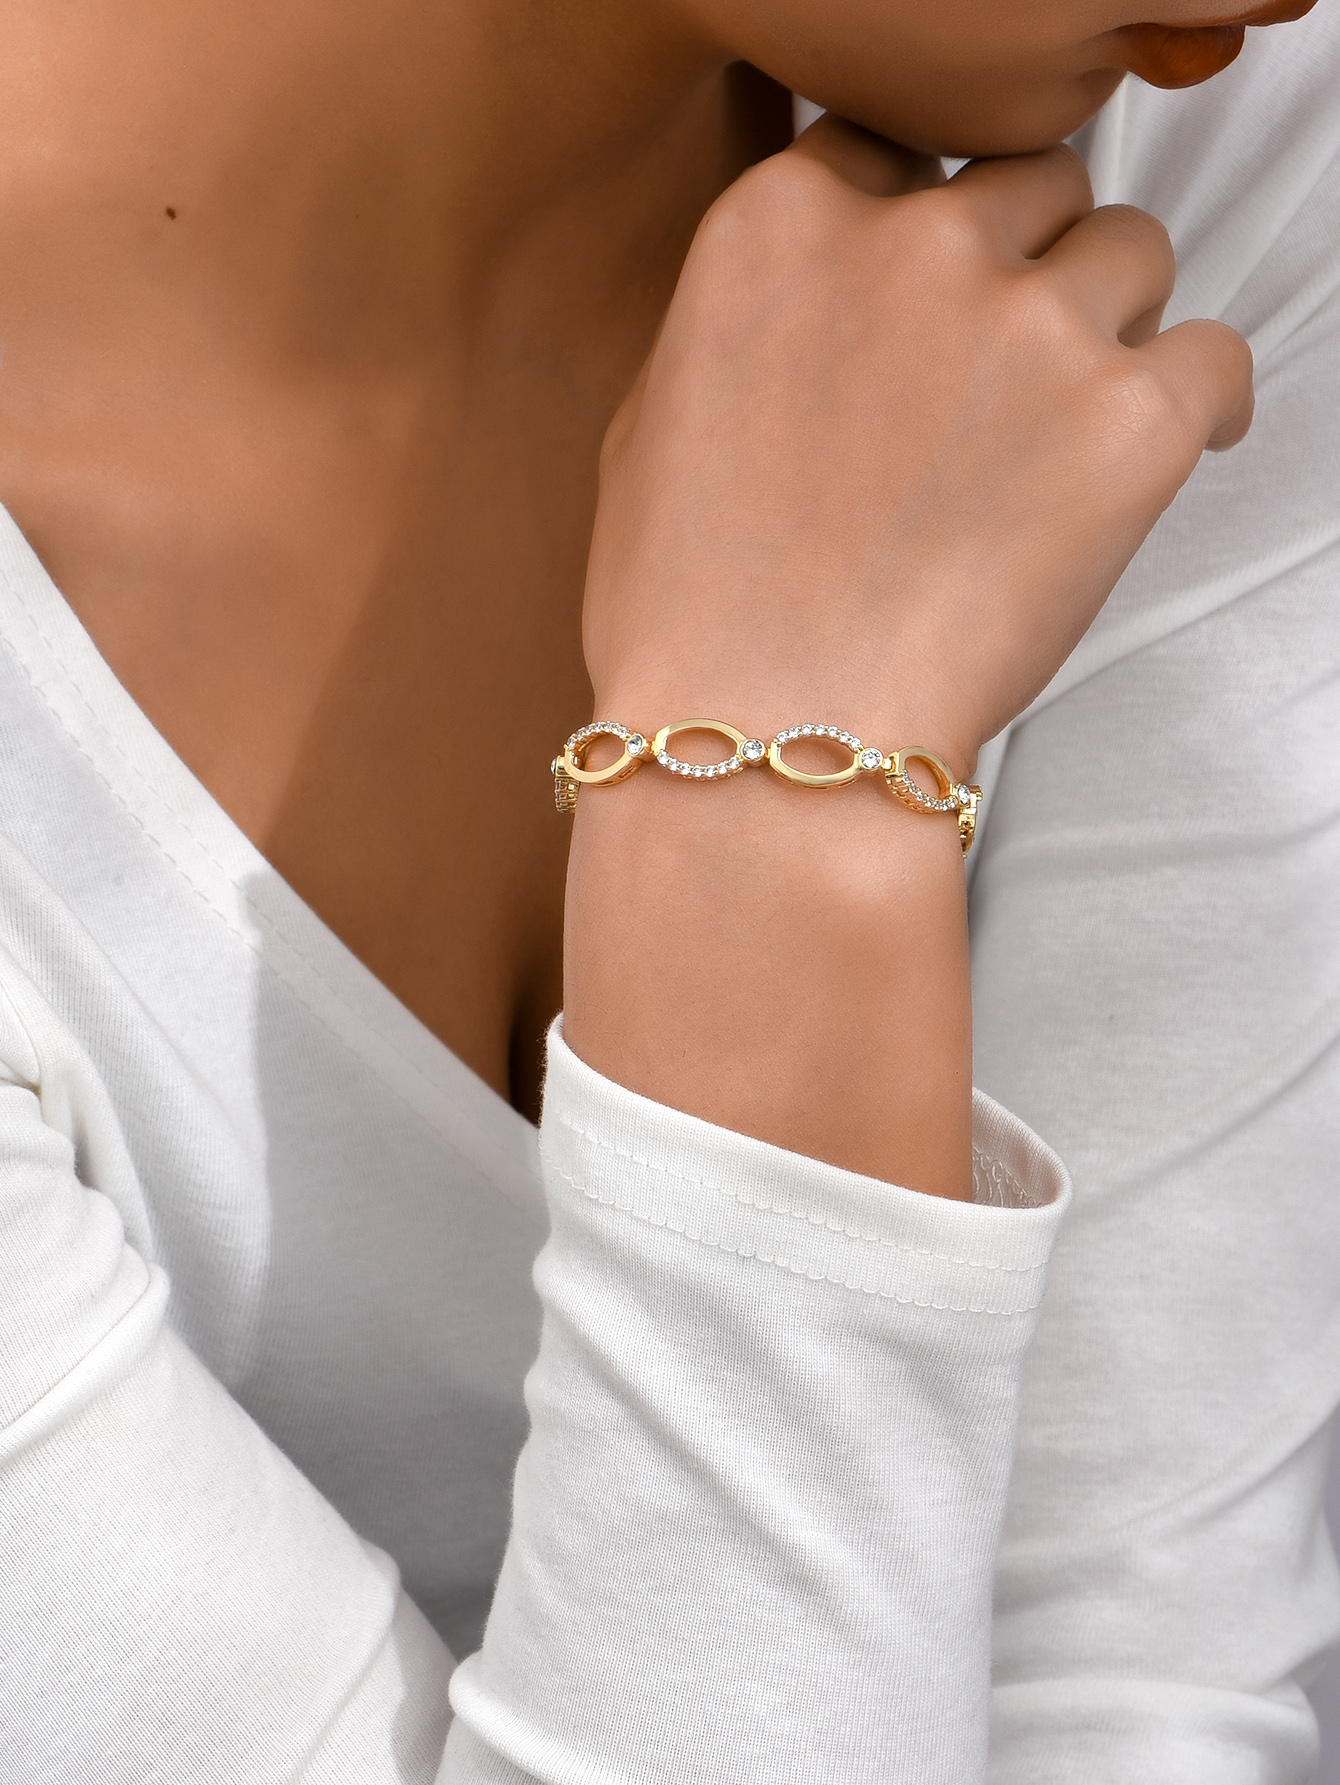 10pc_Gold Tone Multi-linked Infinity Bracelet with Premium Crystal_UK Seller_GSVB061-Gold